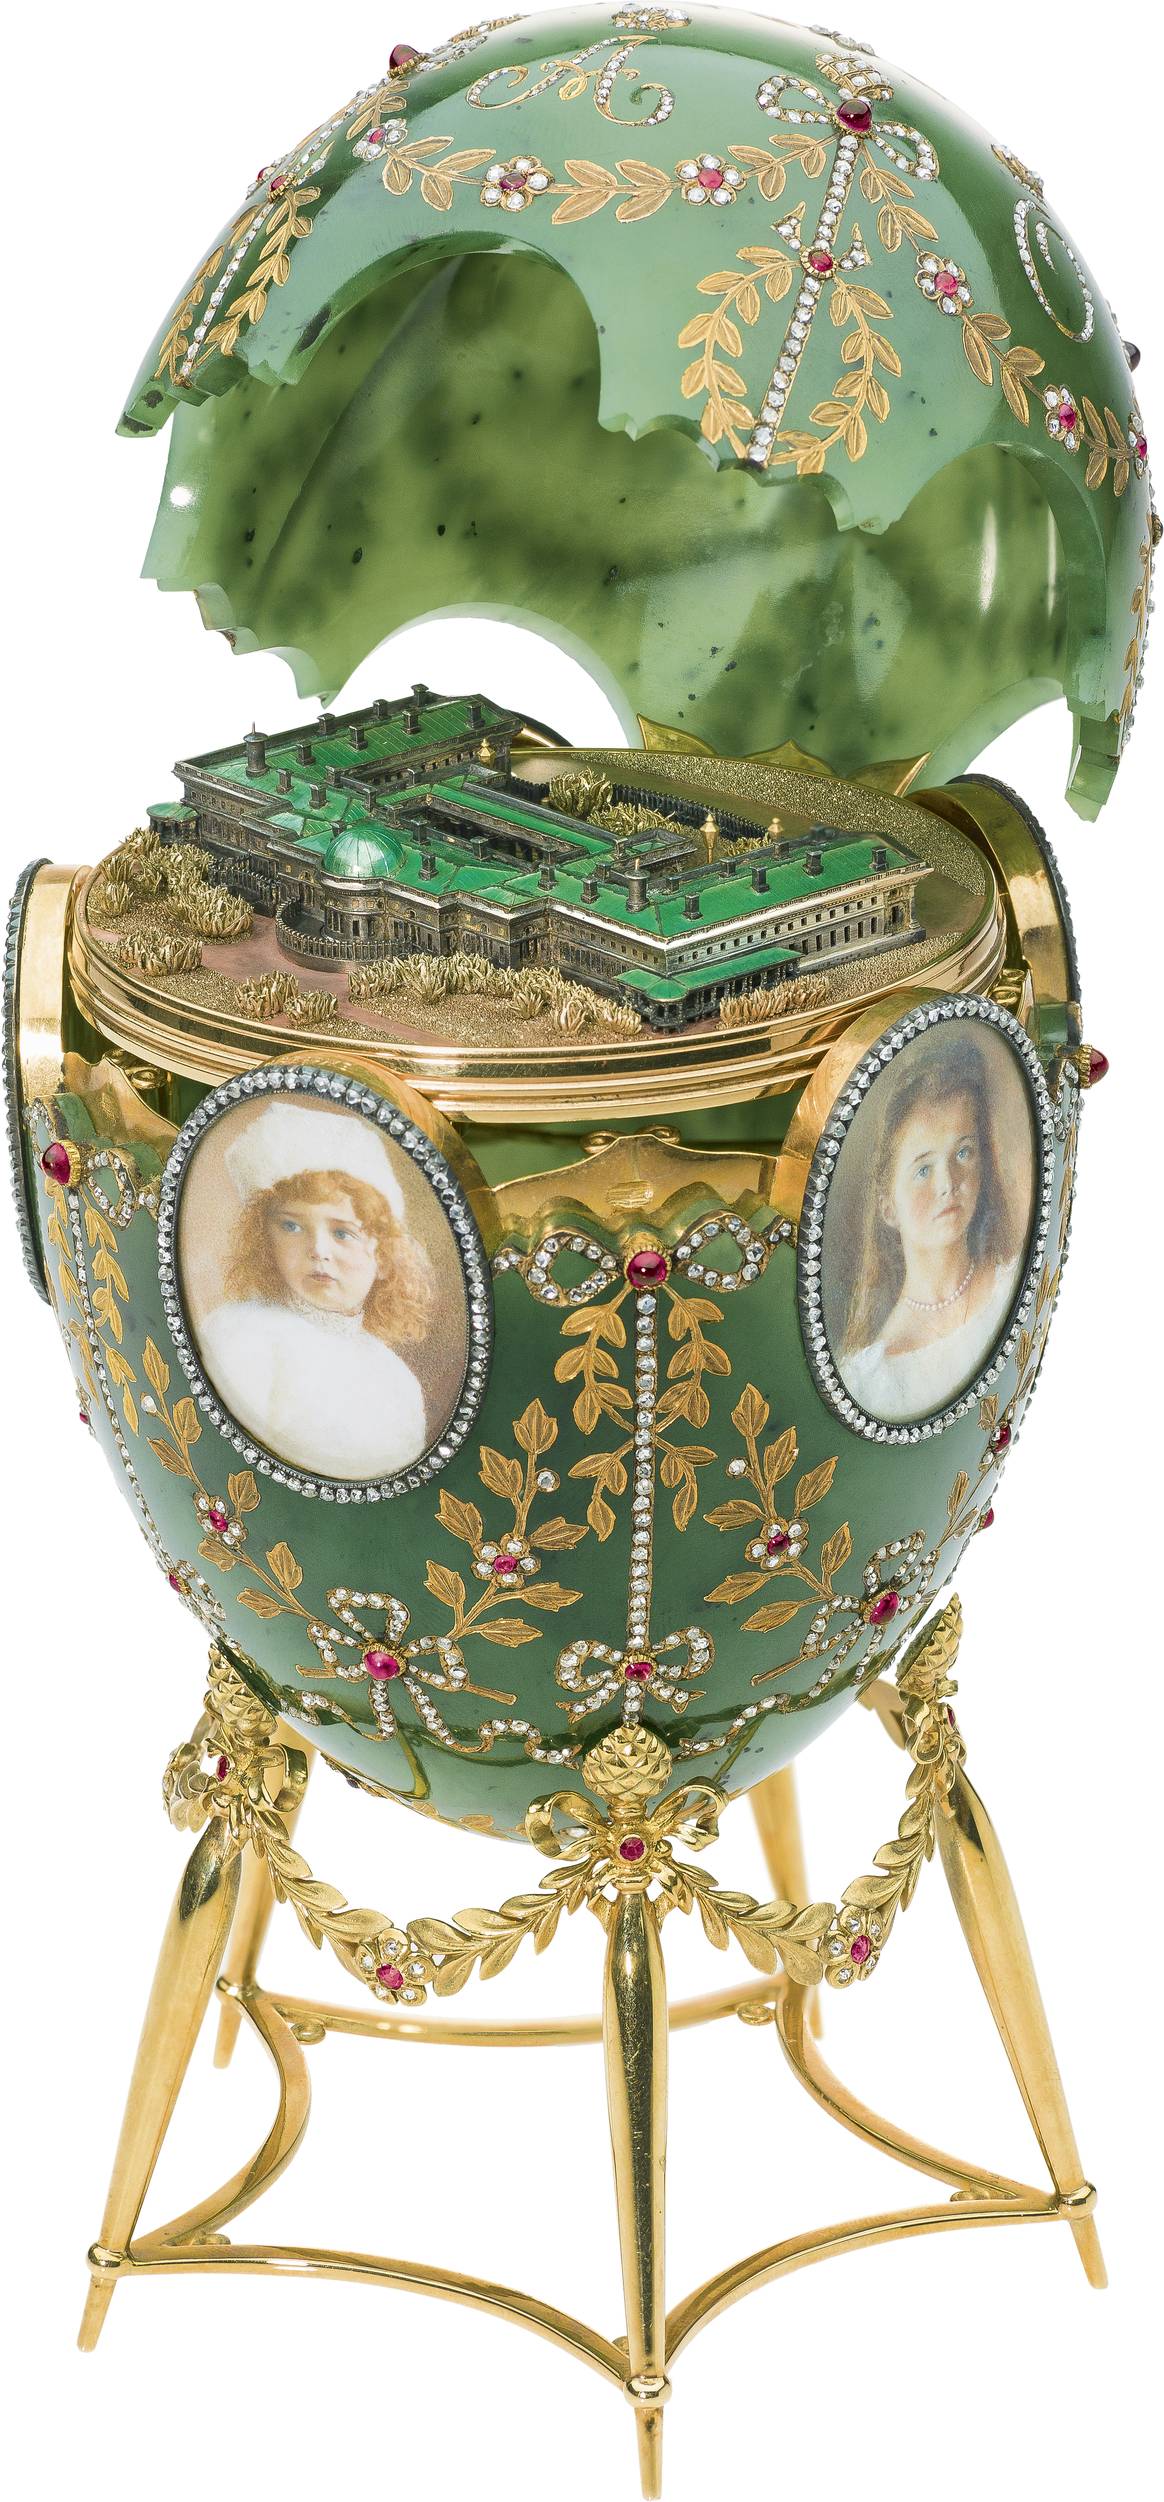 Image: courtesy of the V&A; The Alexander Palace Egg, Fabergé. Chief Workmaster Henrik Wigström (1862-1923) - The Moscow Kremlin Museums.